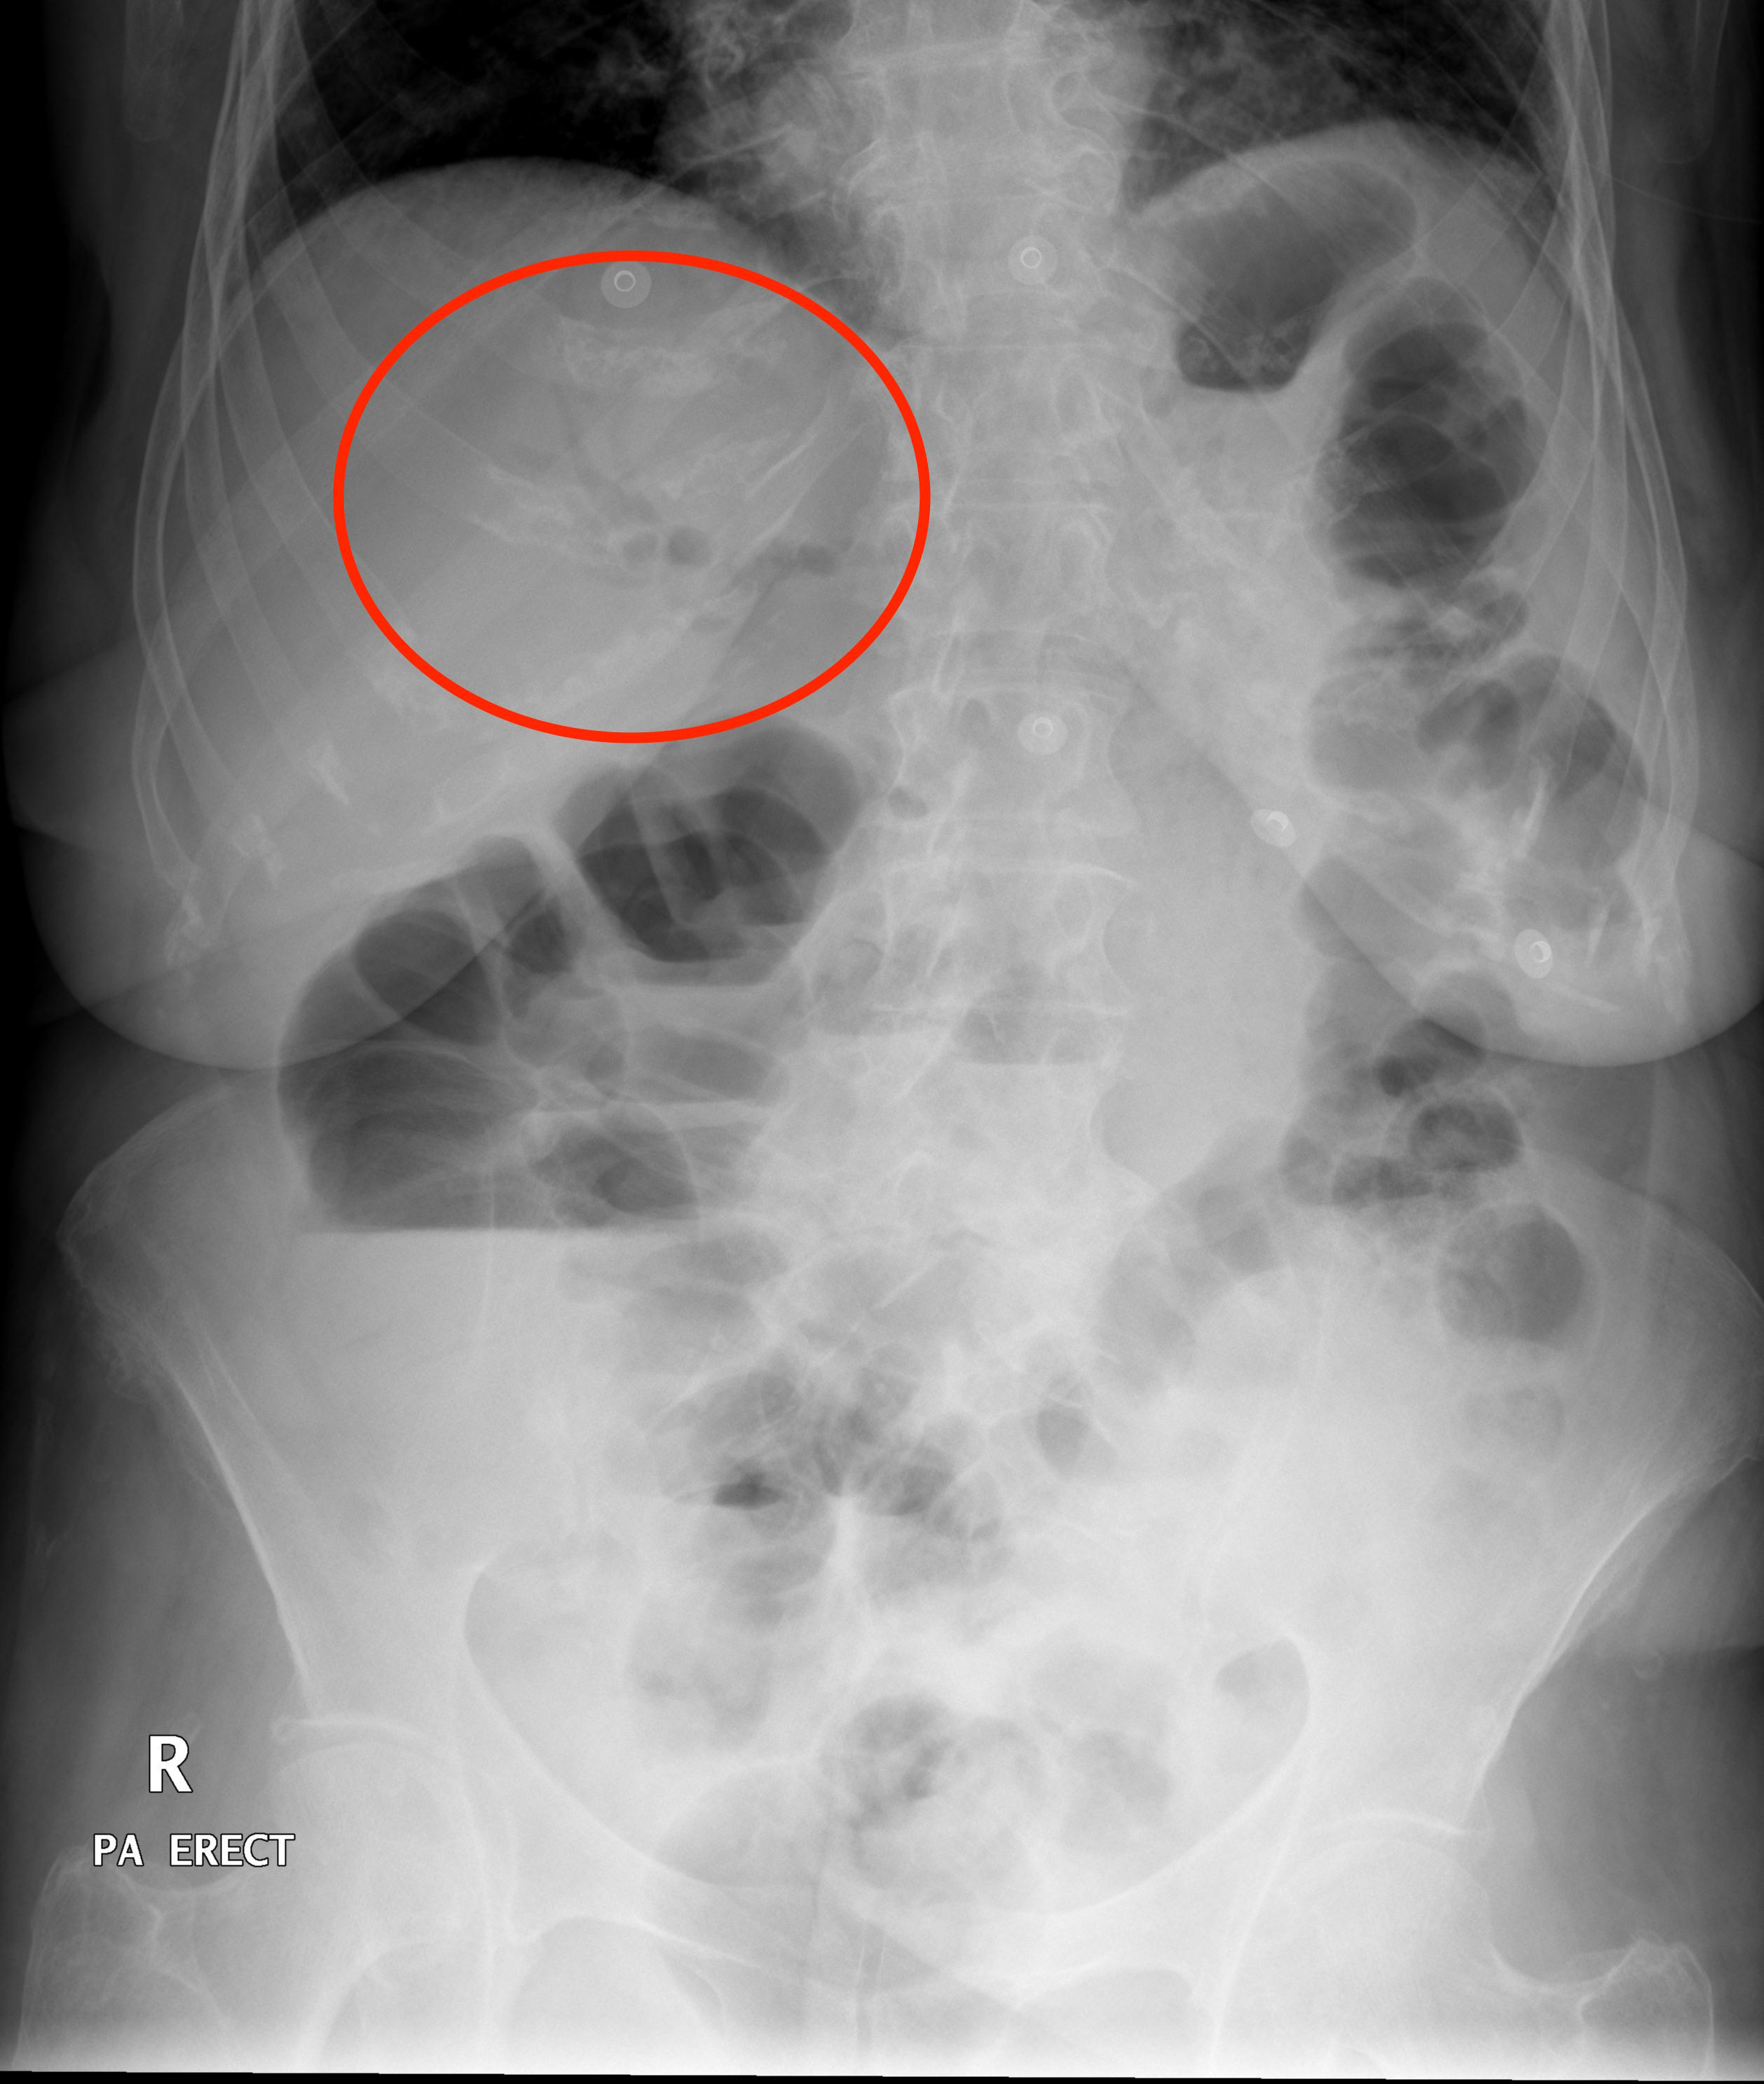 Detection of pneumobilia on abdominal X-ray (source)